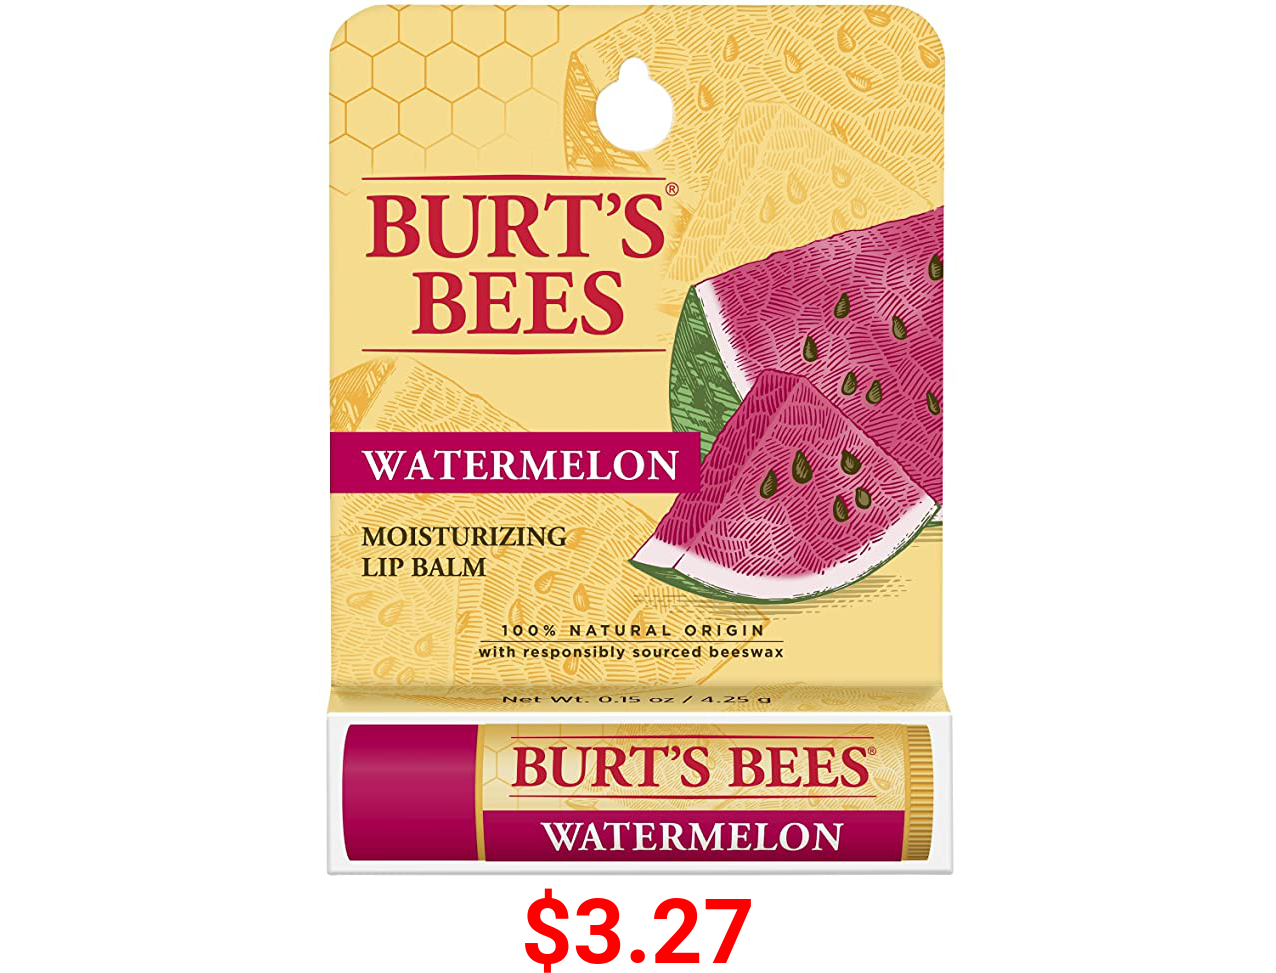 Burt's Bees 100% Natural Origin Moisturizing Lip Balm, Watermelon, 1 Tube